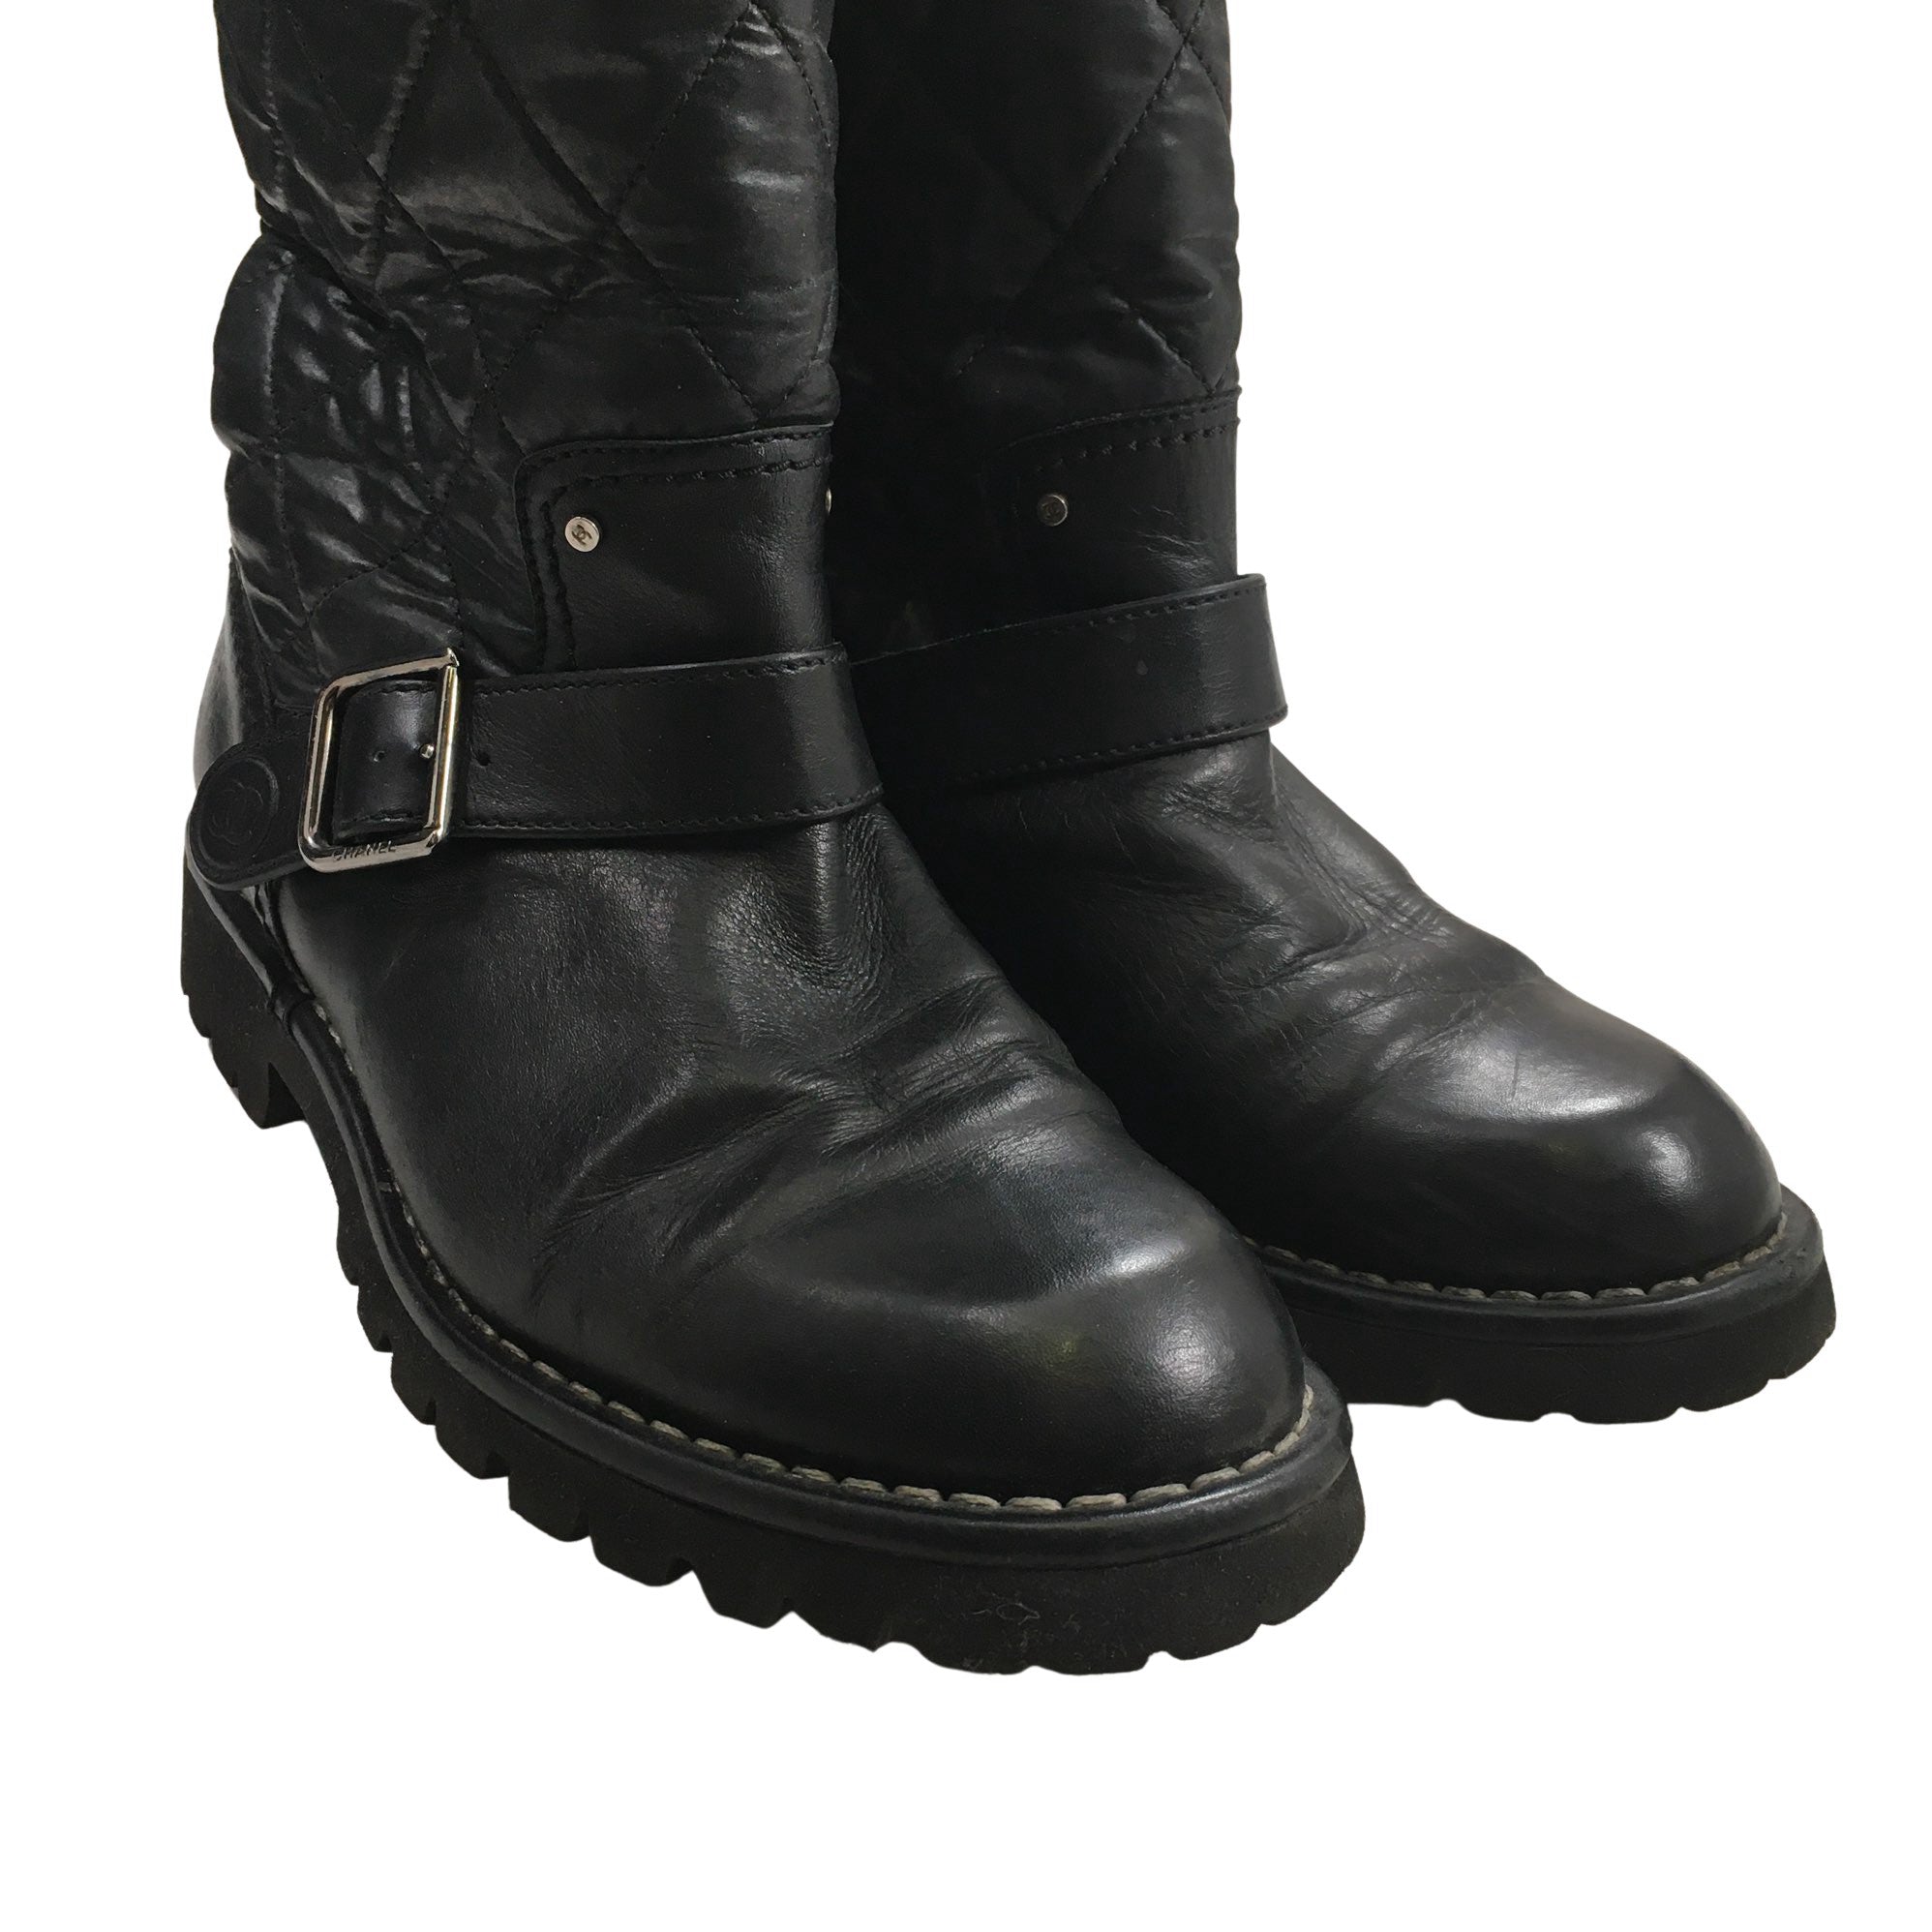 Women's Chanel Boots, size 38 (Black)